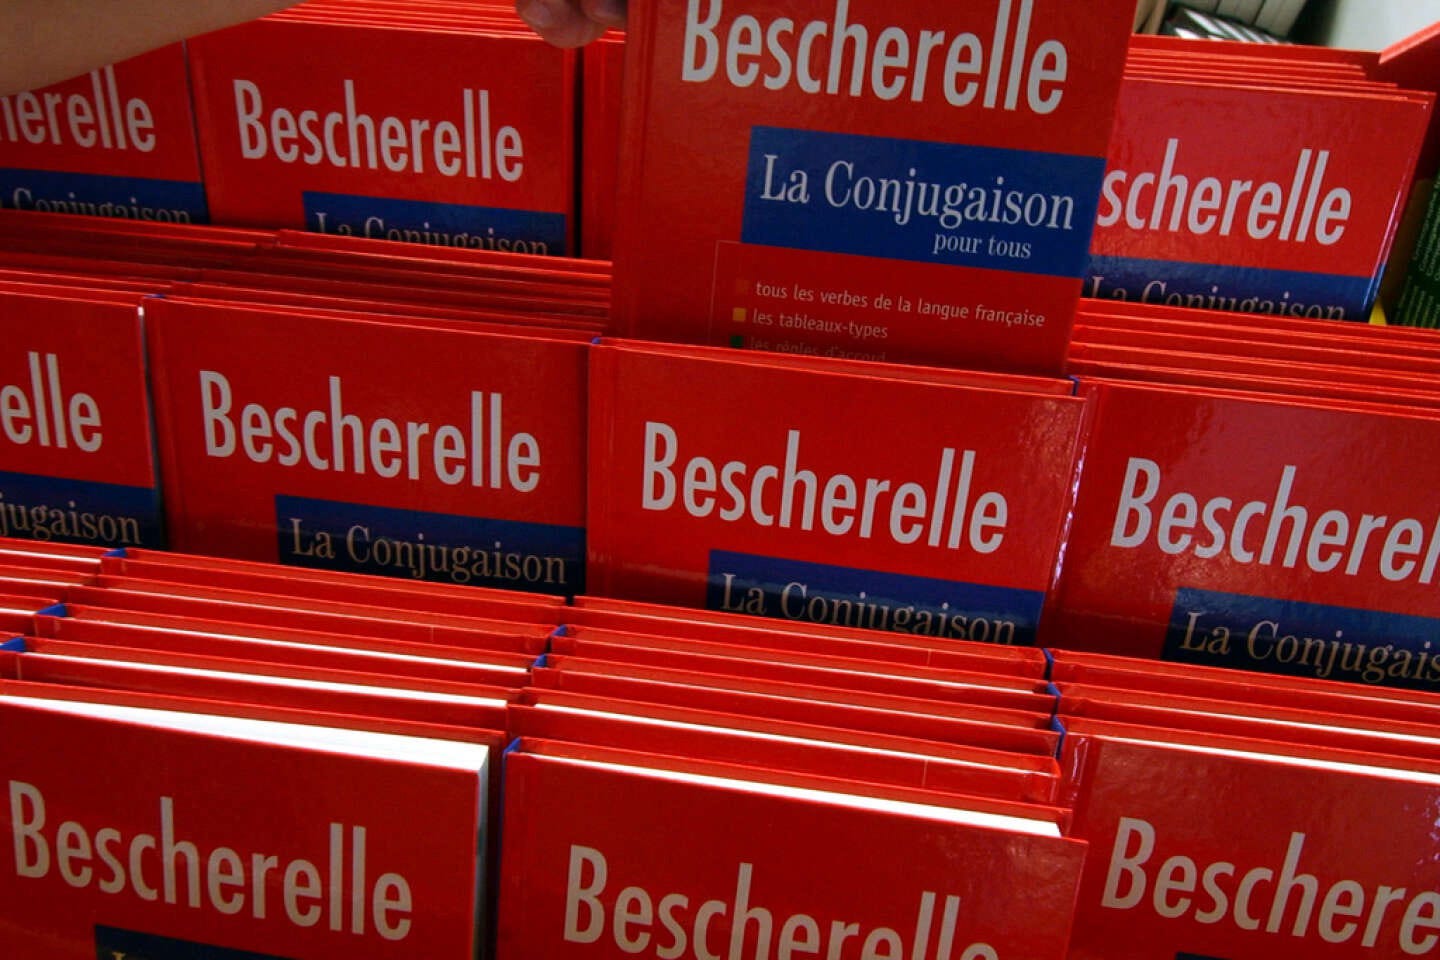 A bookshop display full of bright red Bescherelle French grammar books.